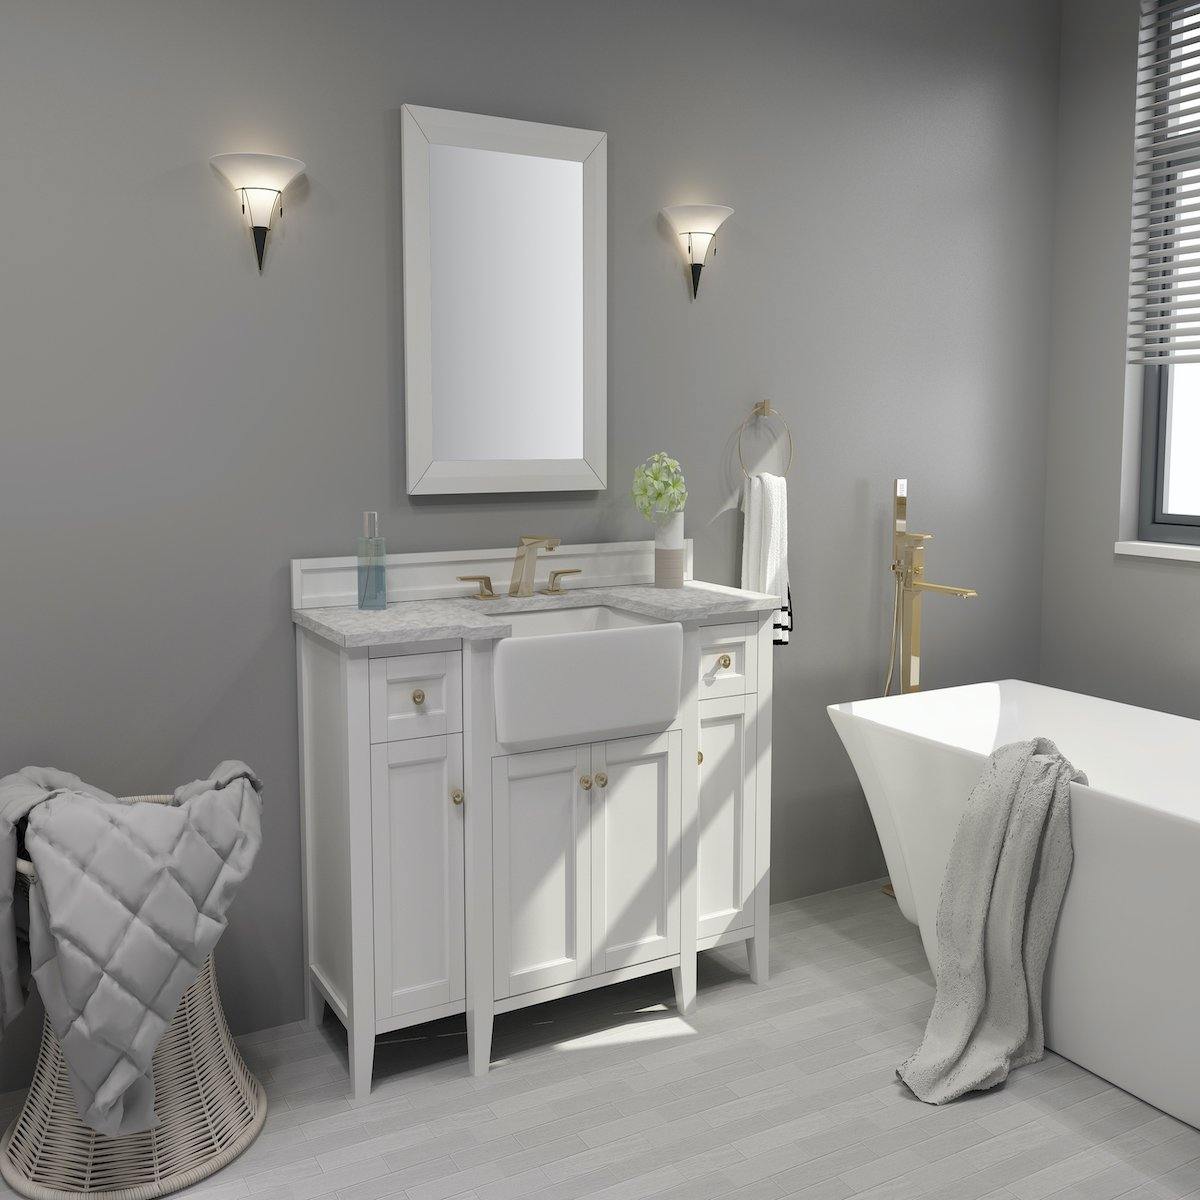 Ancerre Designs Adeline 48 Inch White Single Vanity in Bathroom